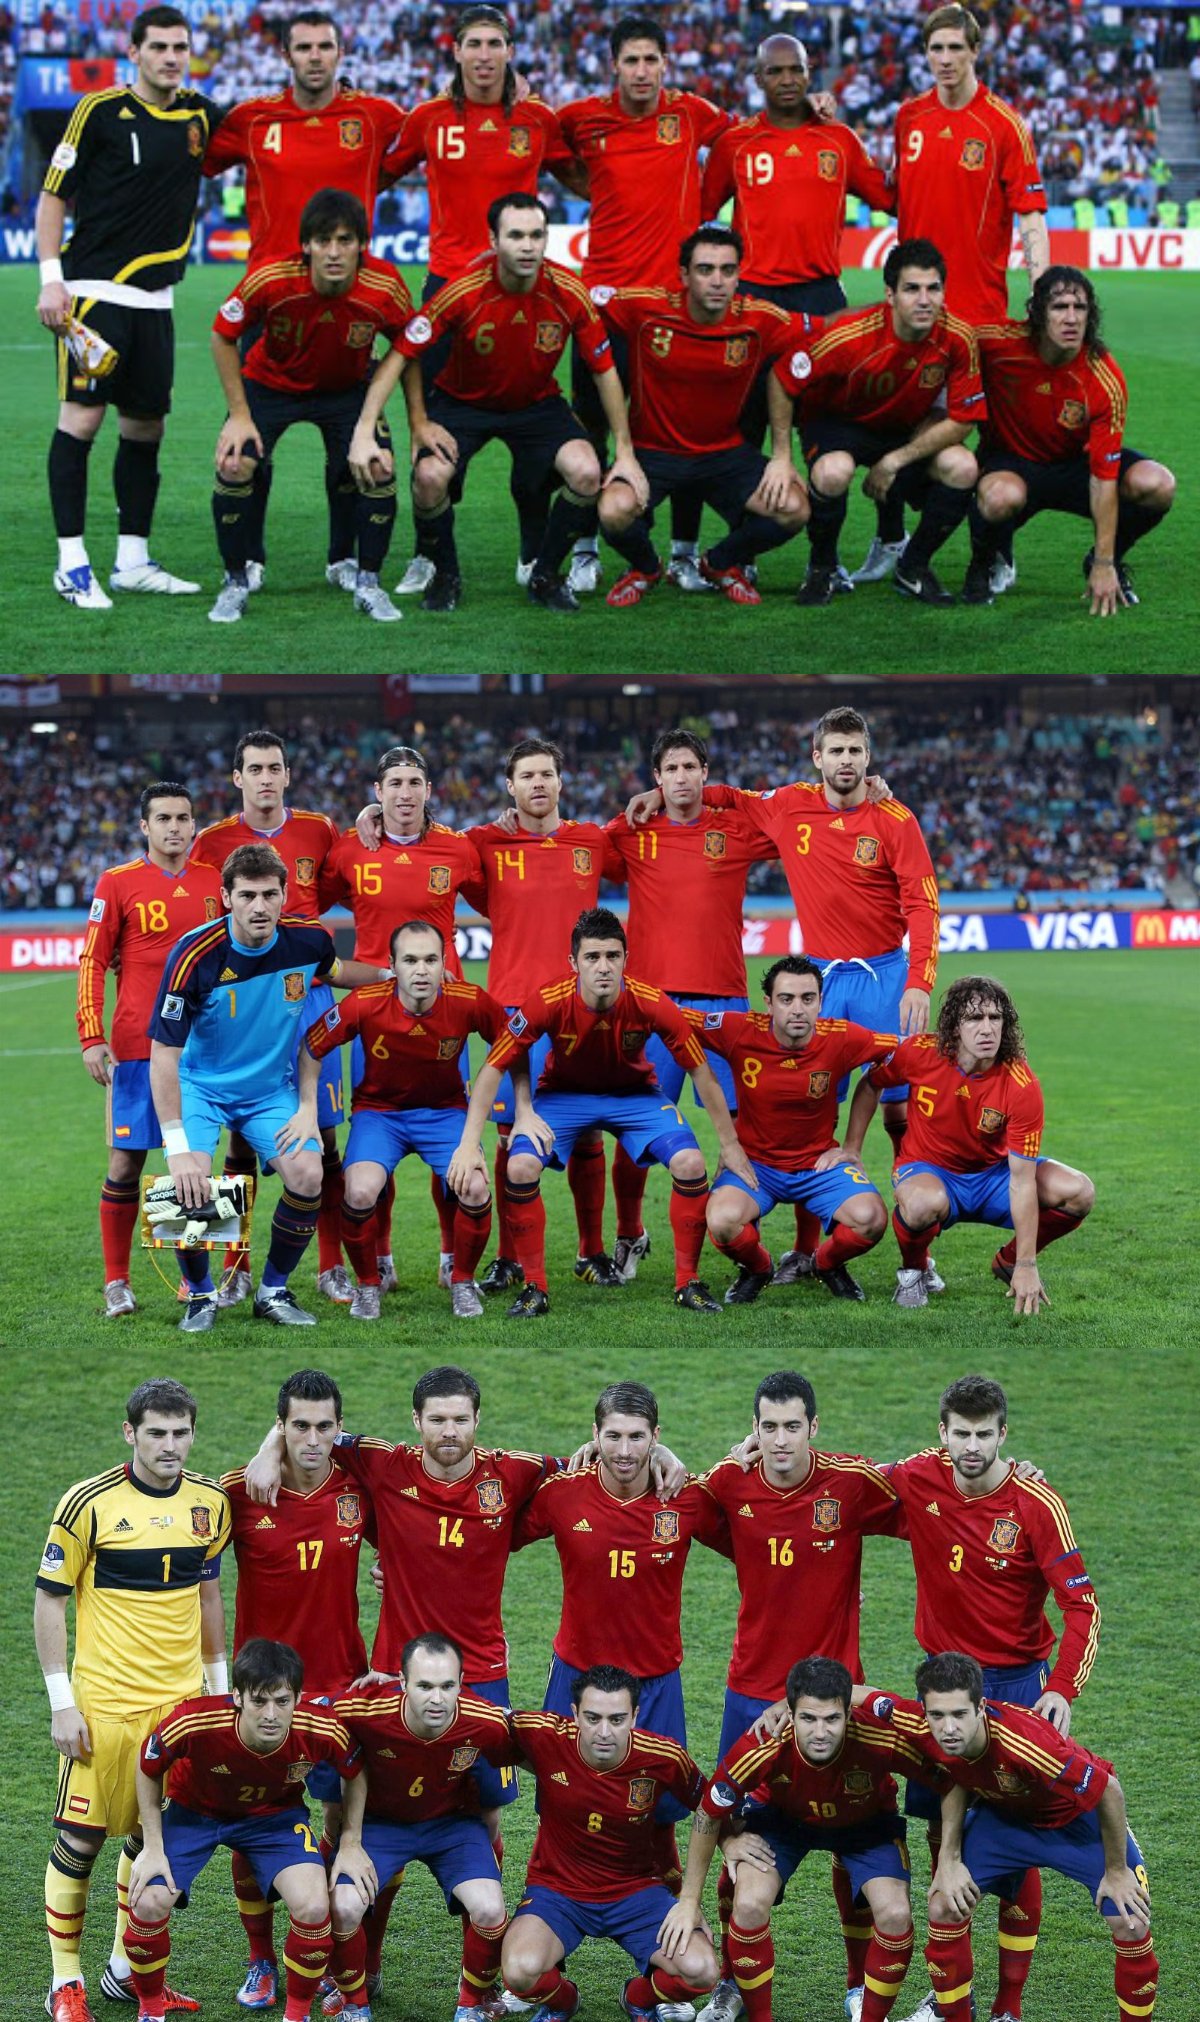 تويتر \ Fútbol ⚽ Moderno على تويتر: "→Eurocopa 2008: España CAMPEÓN. →Mundial 2010: España CAMPEÓN. →Eurocopa 2012: España CAMPEÓN. Una Selección que deslumbró al mundo del https://t.co/aIwgGirezk"